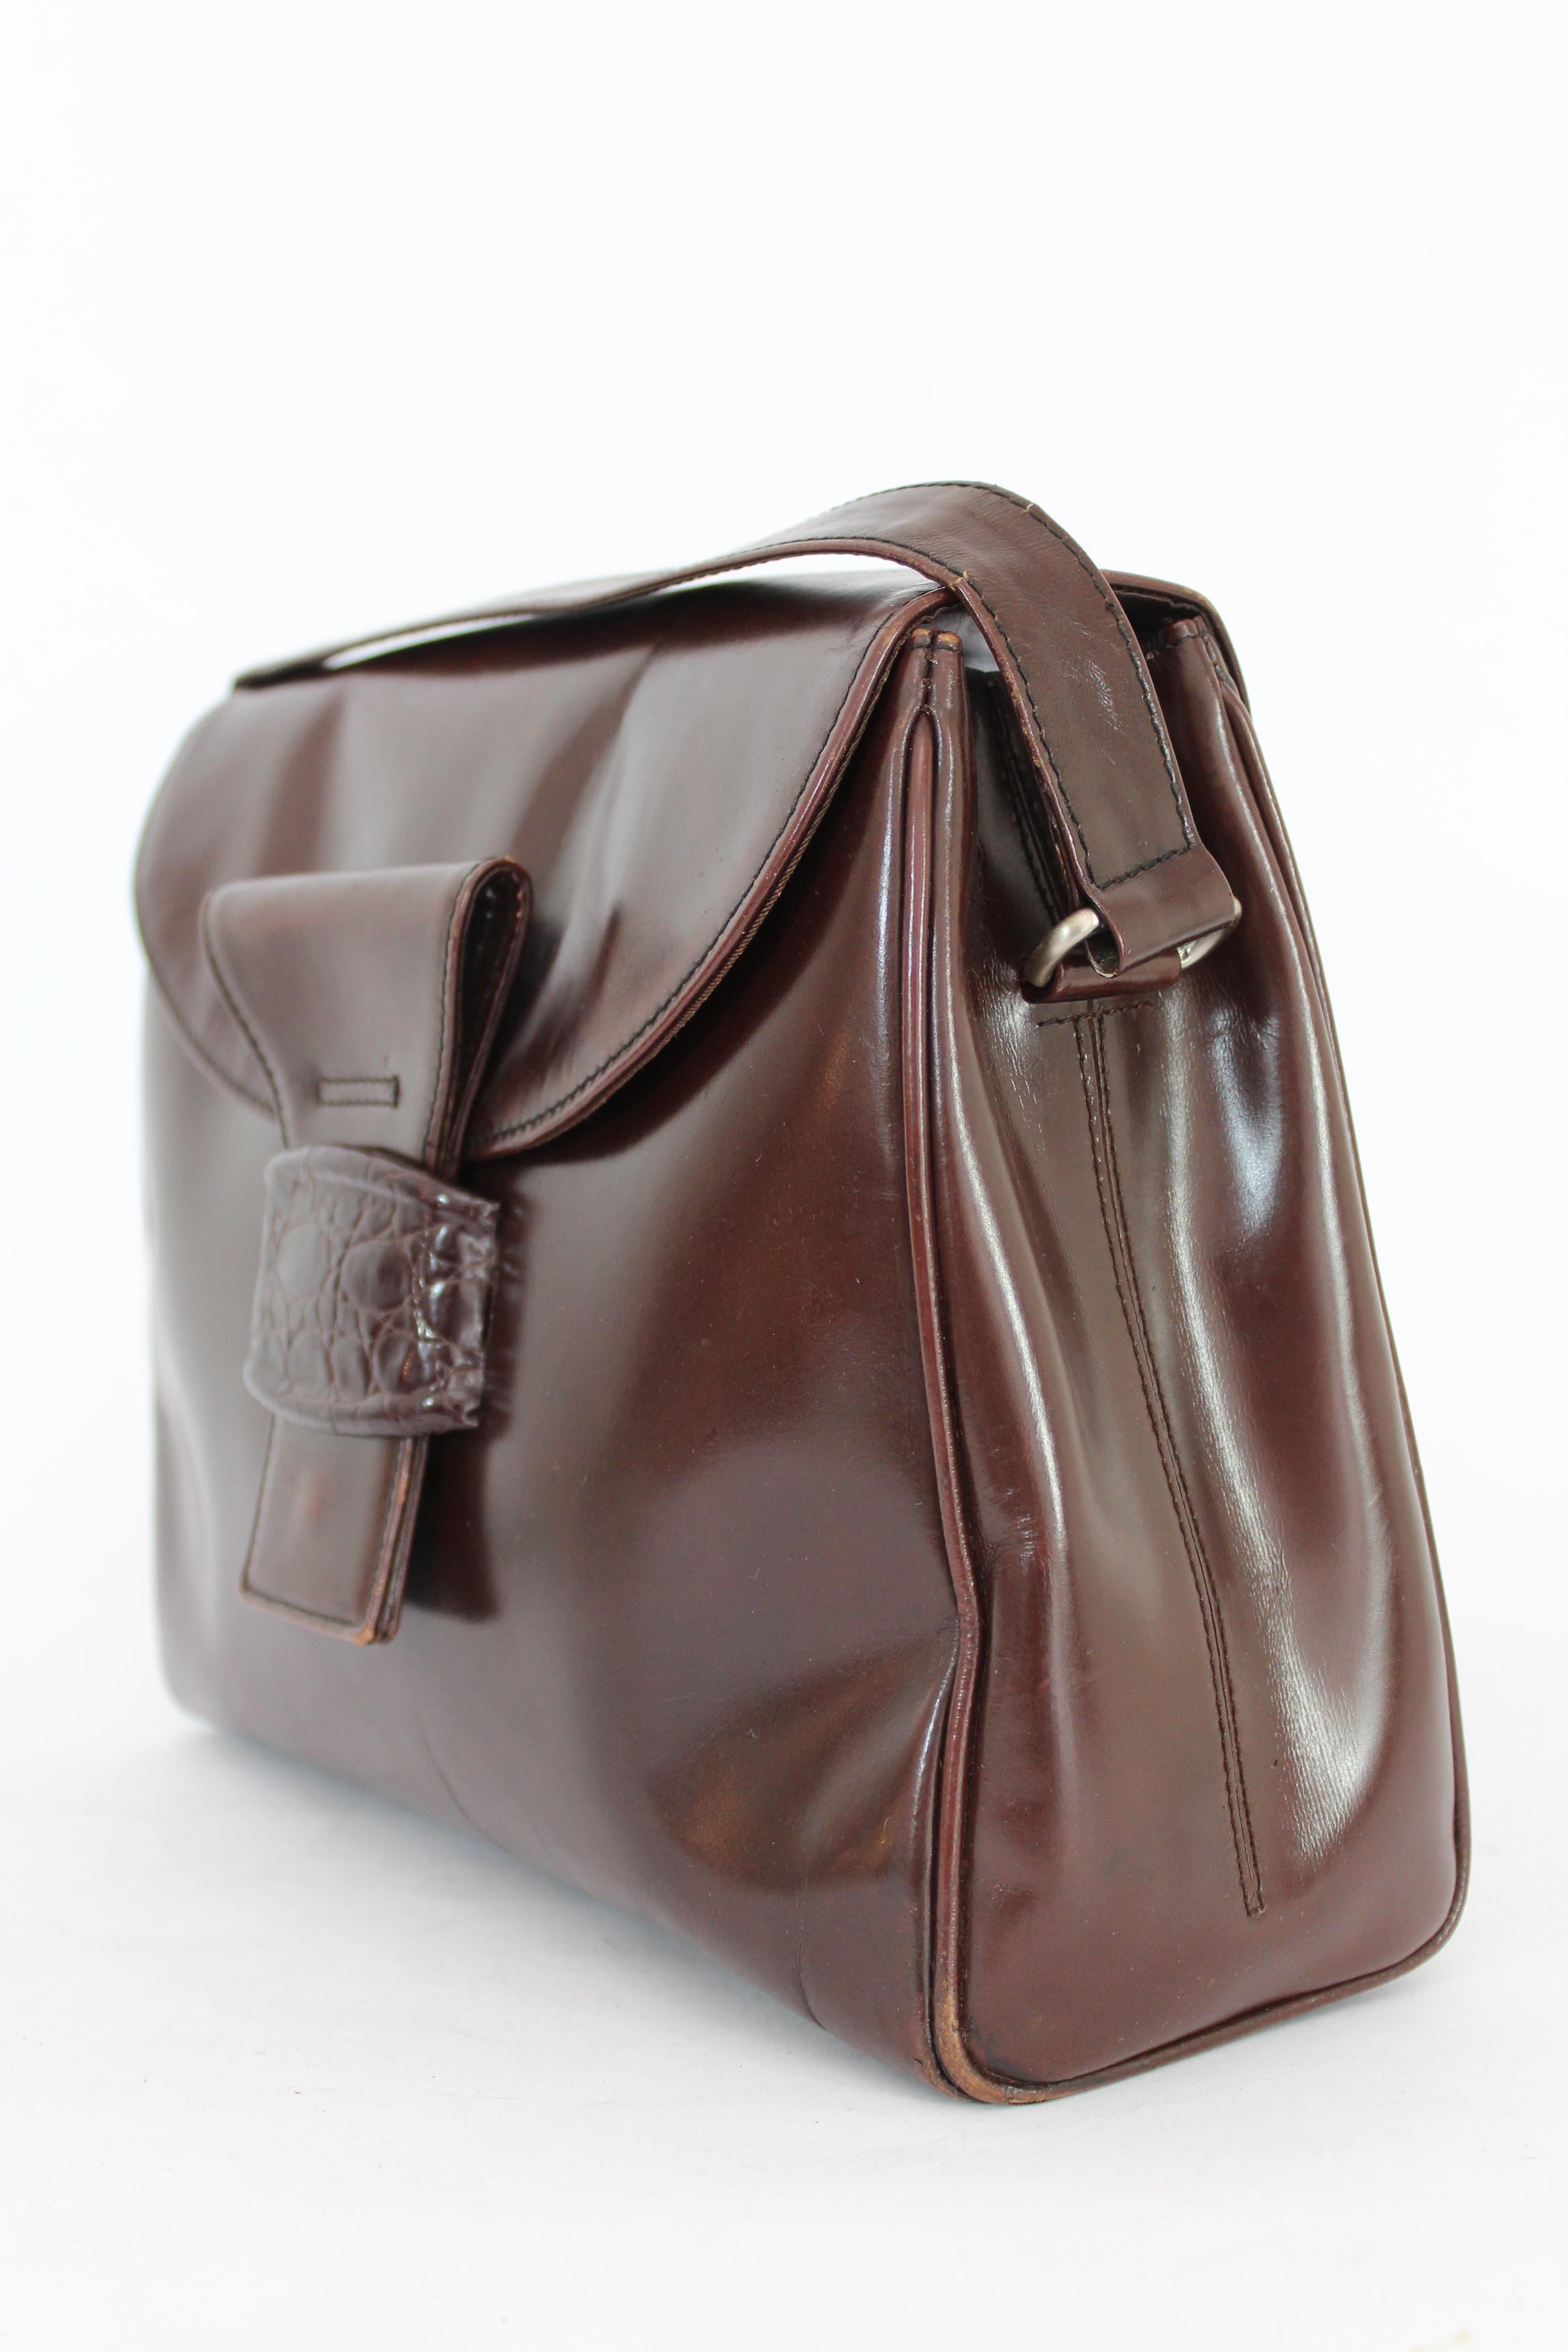 Women's Prada Leather Brown Shoulder Bag 1990s